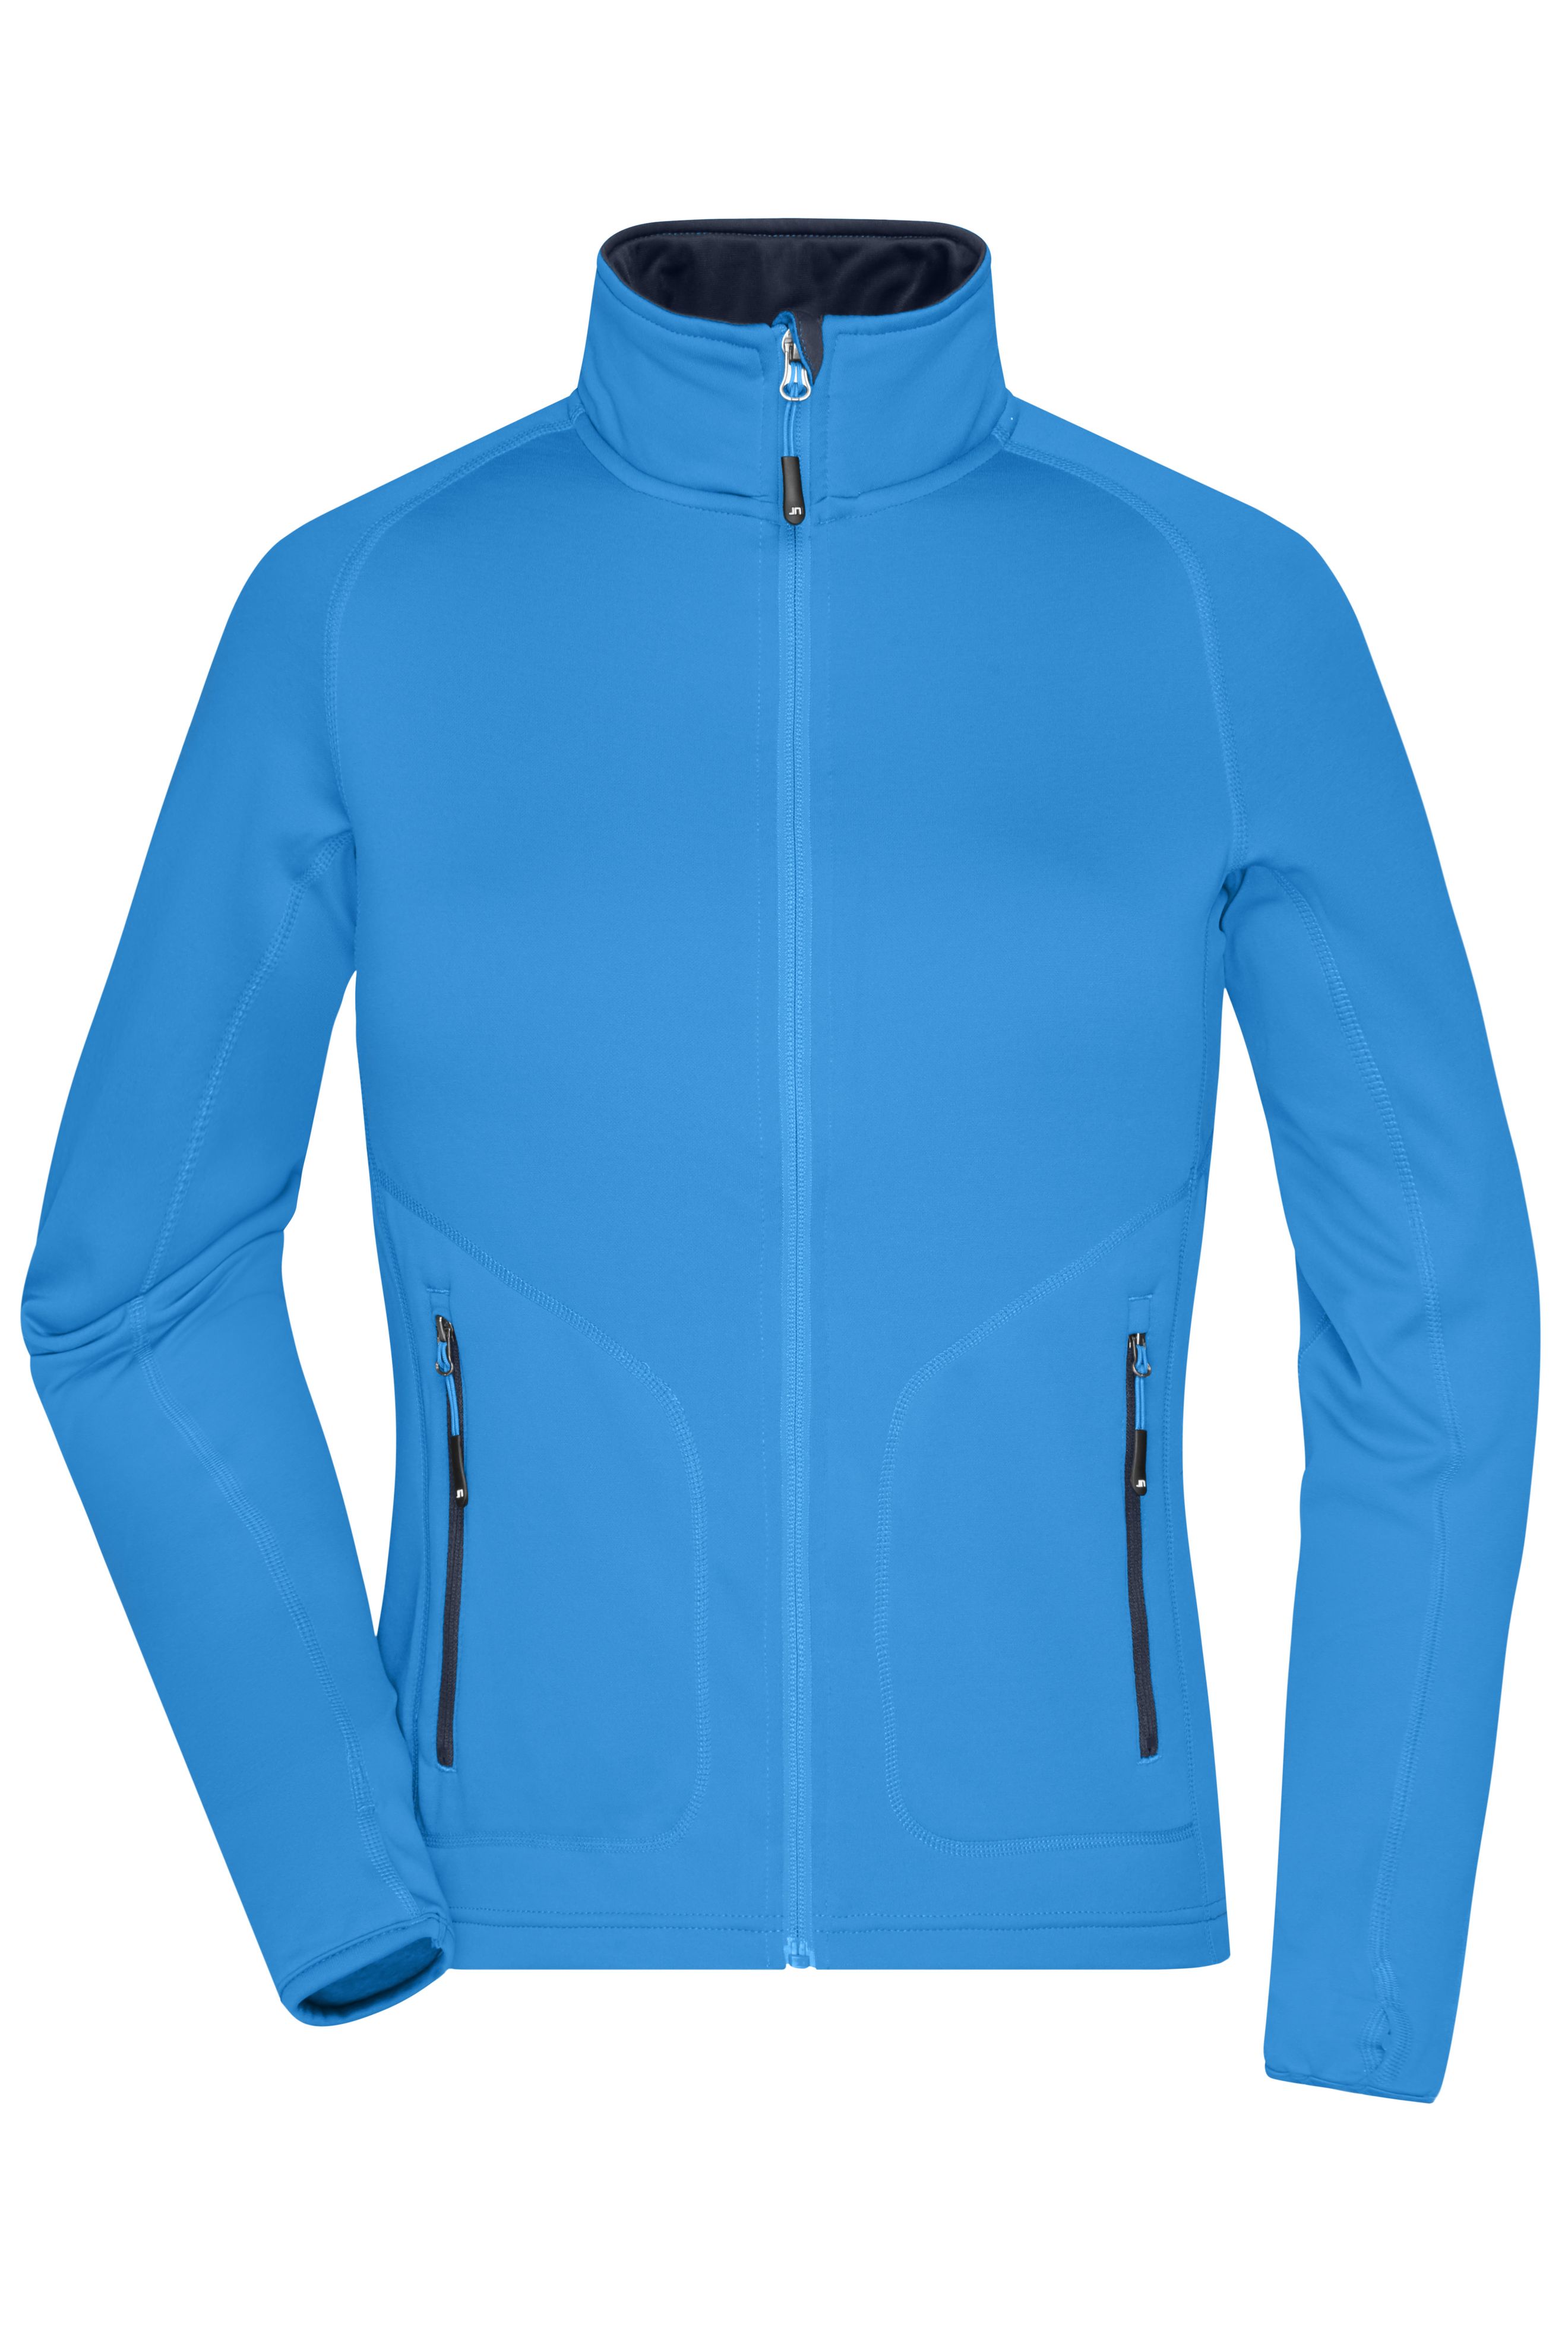 Ladies' Stretchfleece Jacket JN763 Bi-elastische, körperbetonte Jacke im sportlichen Look